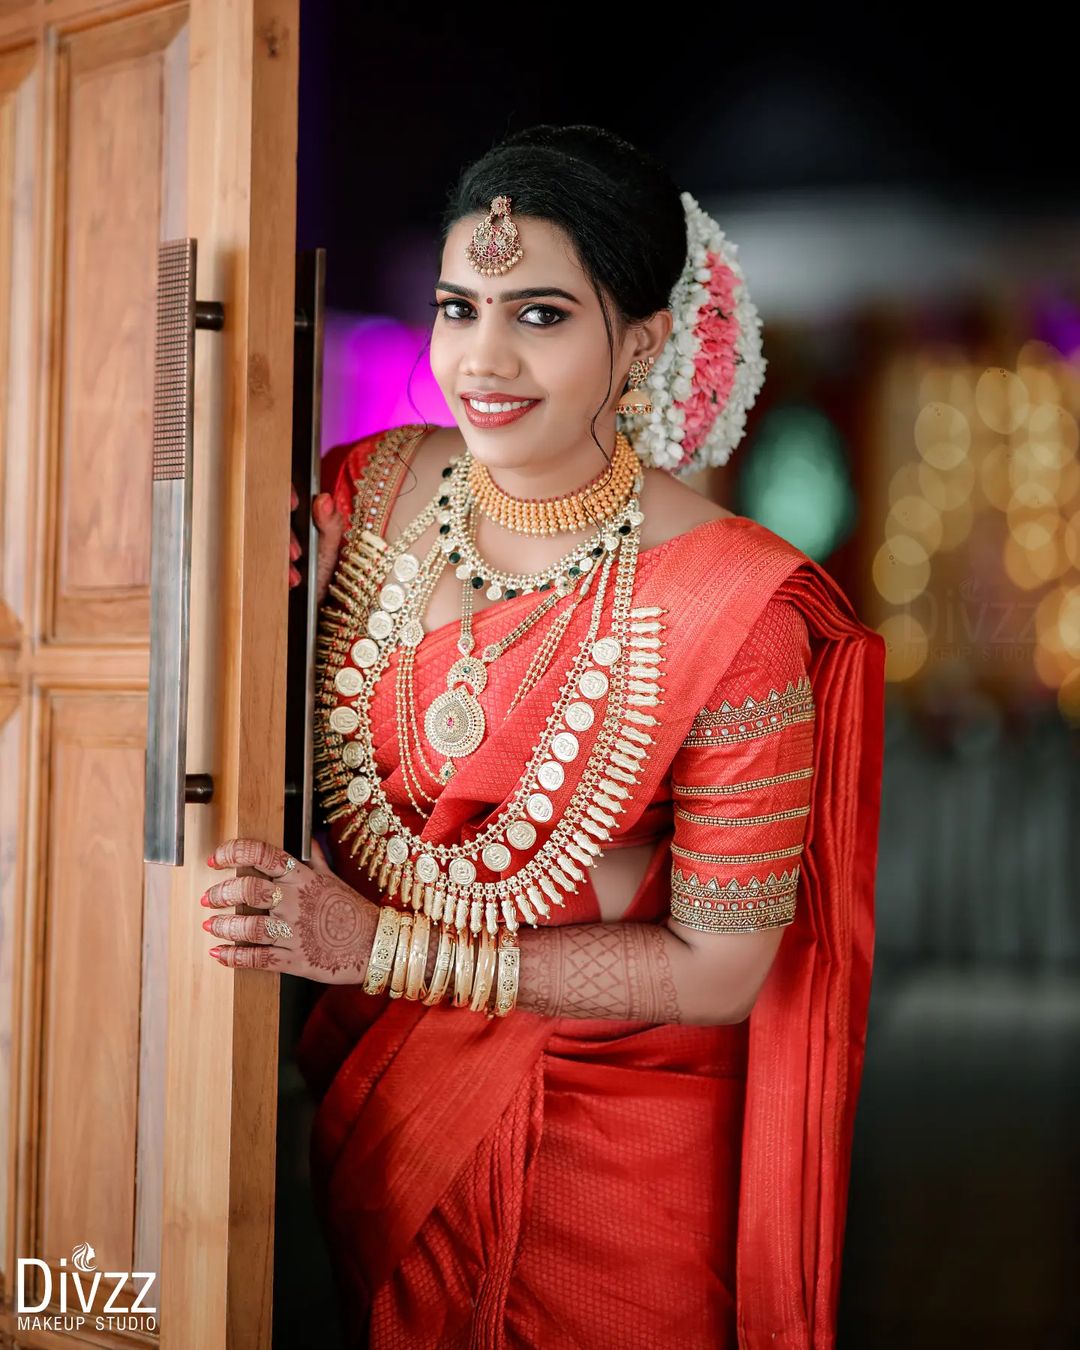 Seena's Soundarya bridal makeover studio & spa